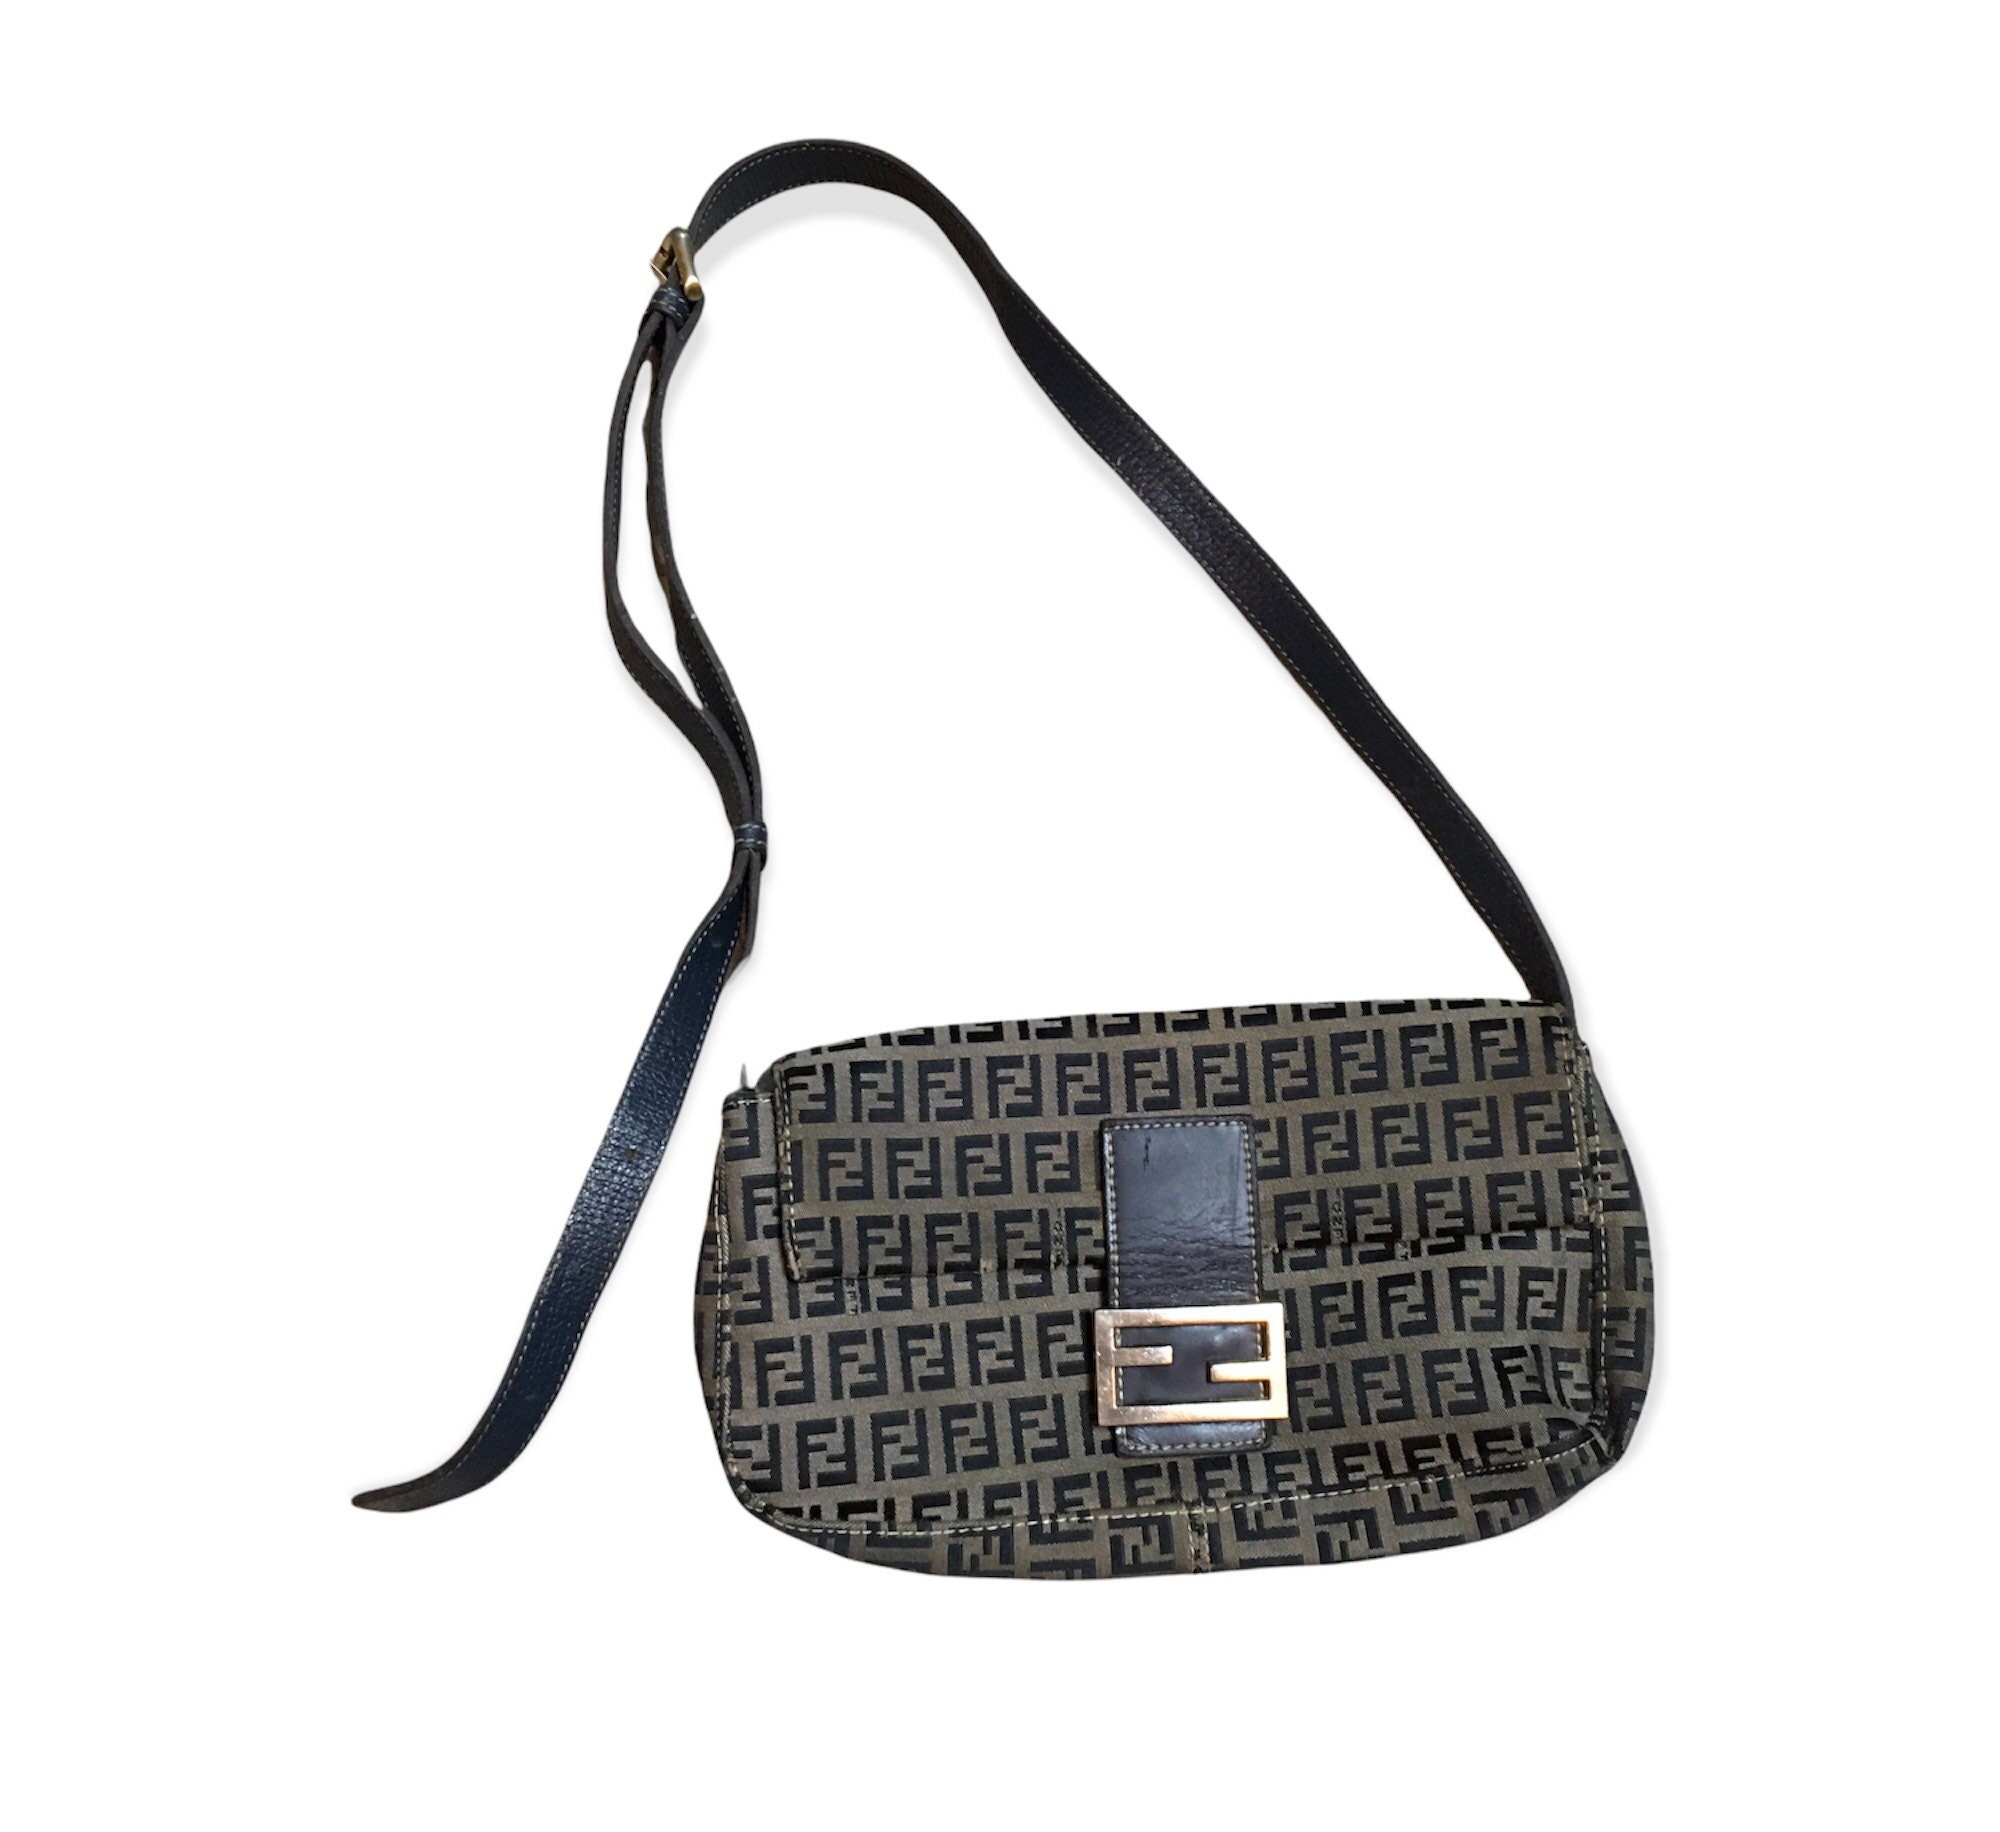 Vintage FENDI Handbag 😍  Fendi handbag, Fendi bags, Vintage fendi